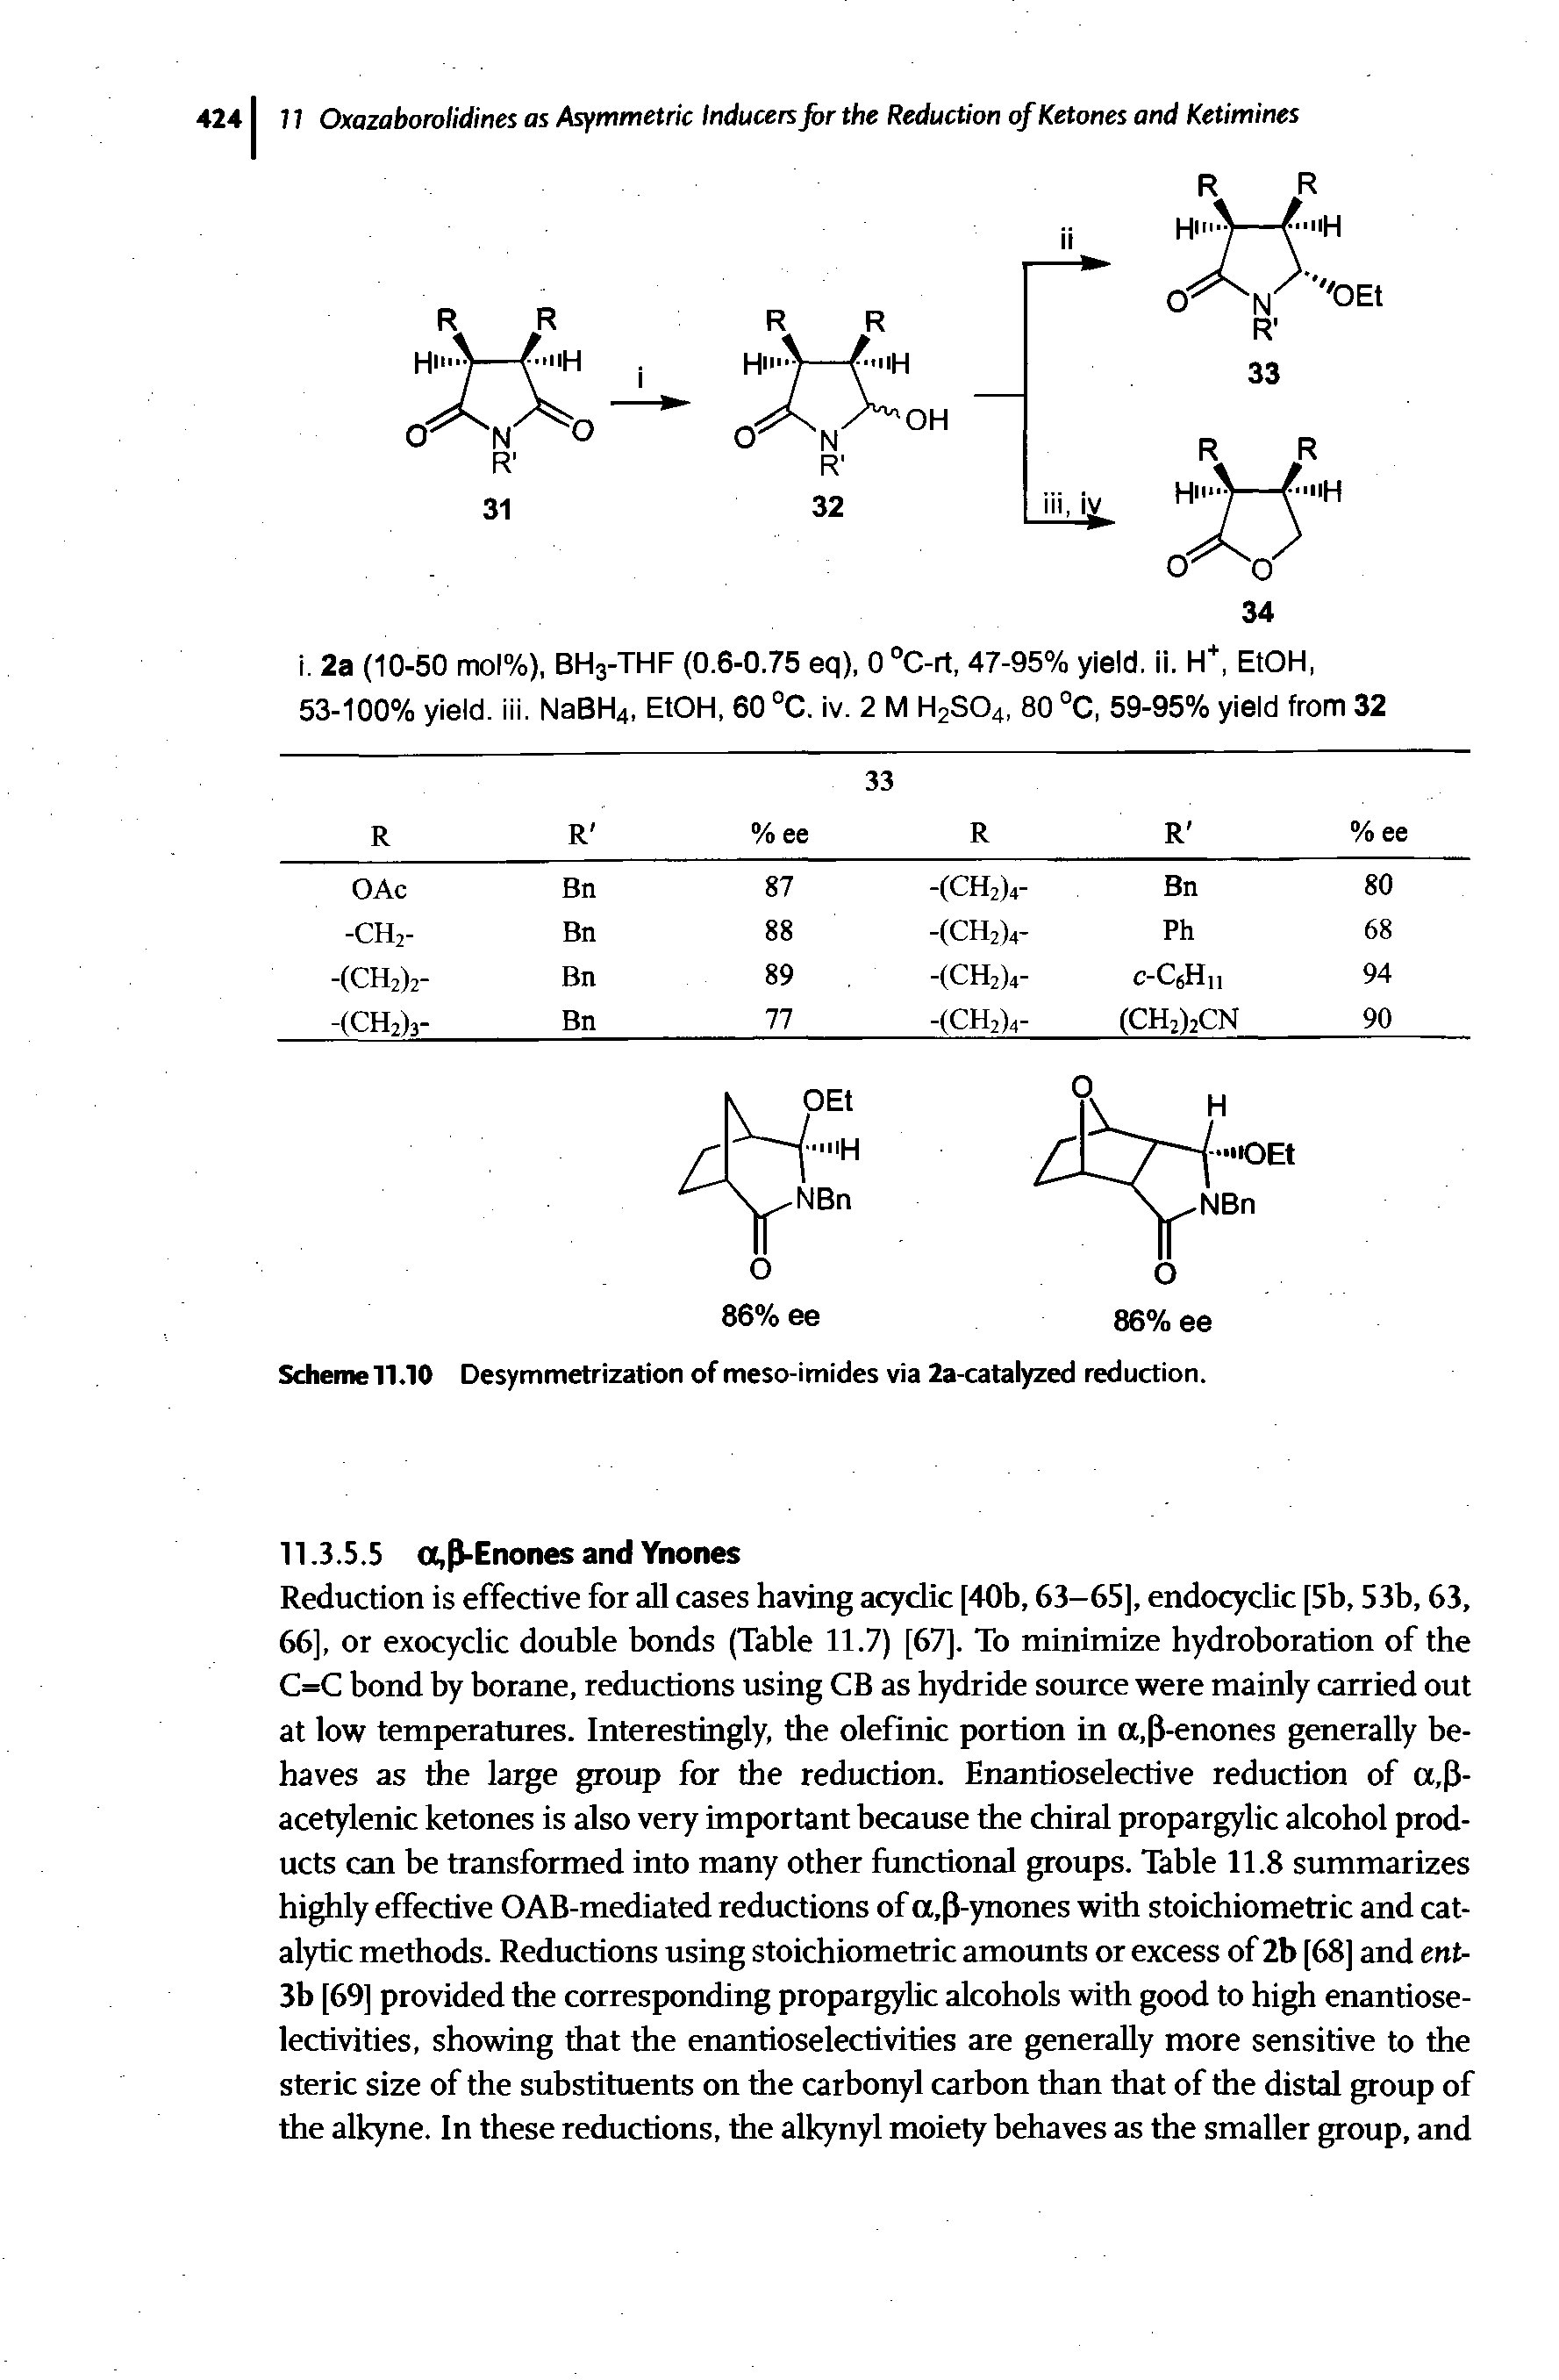 Scheme 11.10 Desymmetrization of meso-imides via 2a-catalyzed reduction.